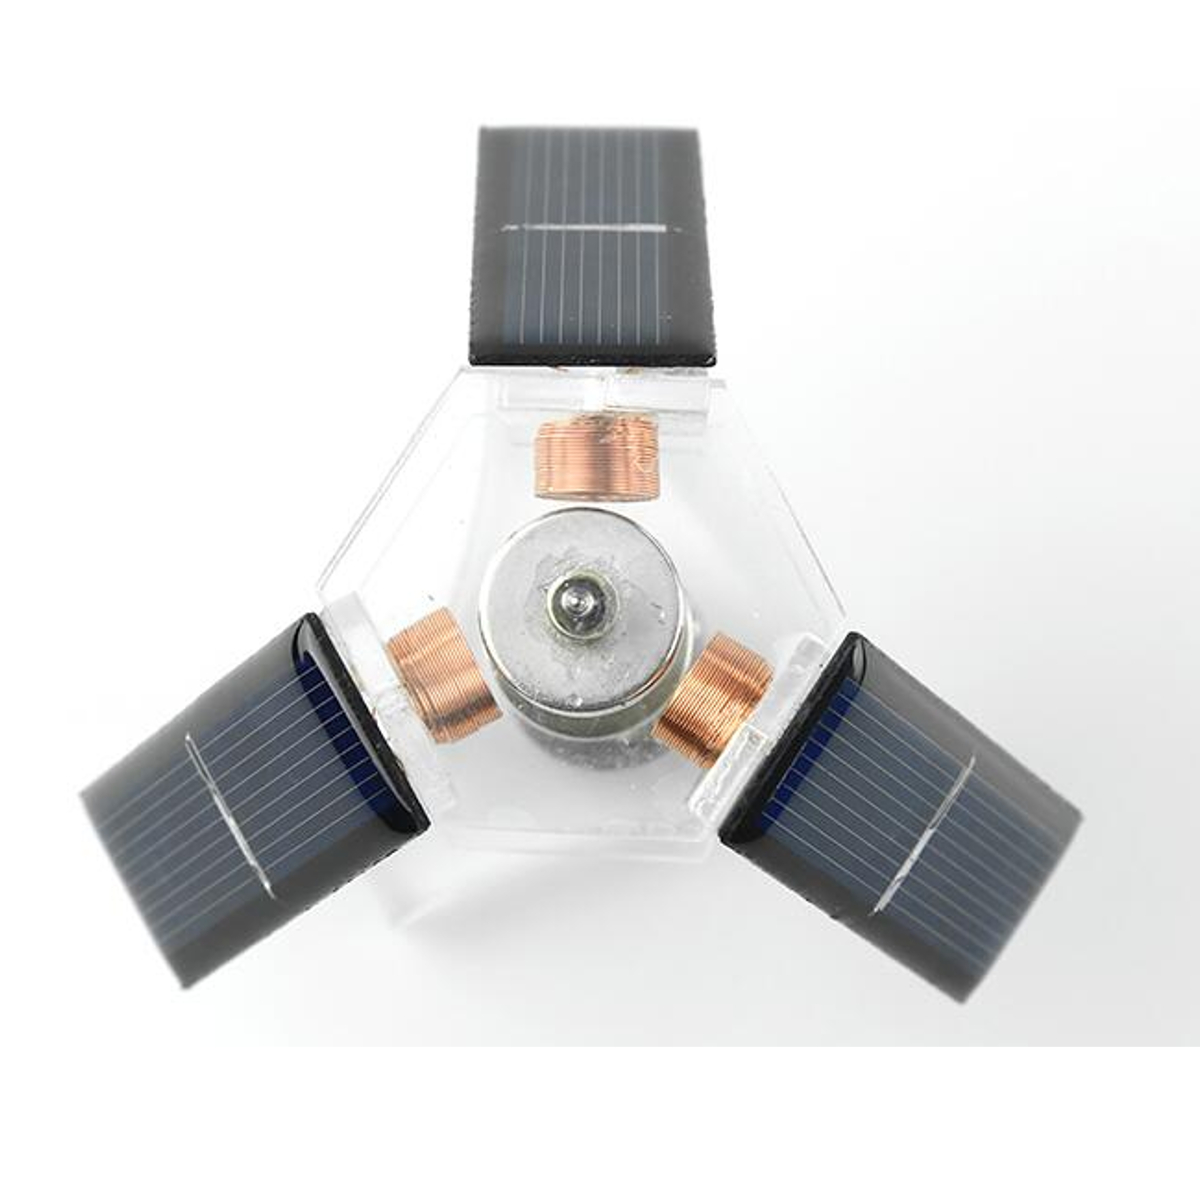 STARK-6-Solar-Magnetic-Levitation-Mendocino-Motor-Education-Model-Steam-Stirling-Engine-1290010-2